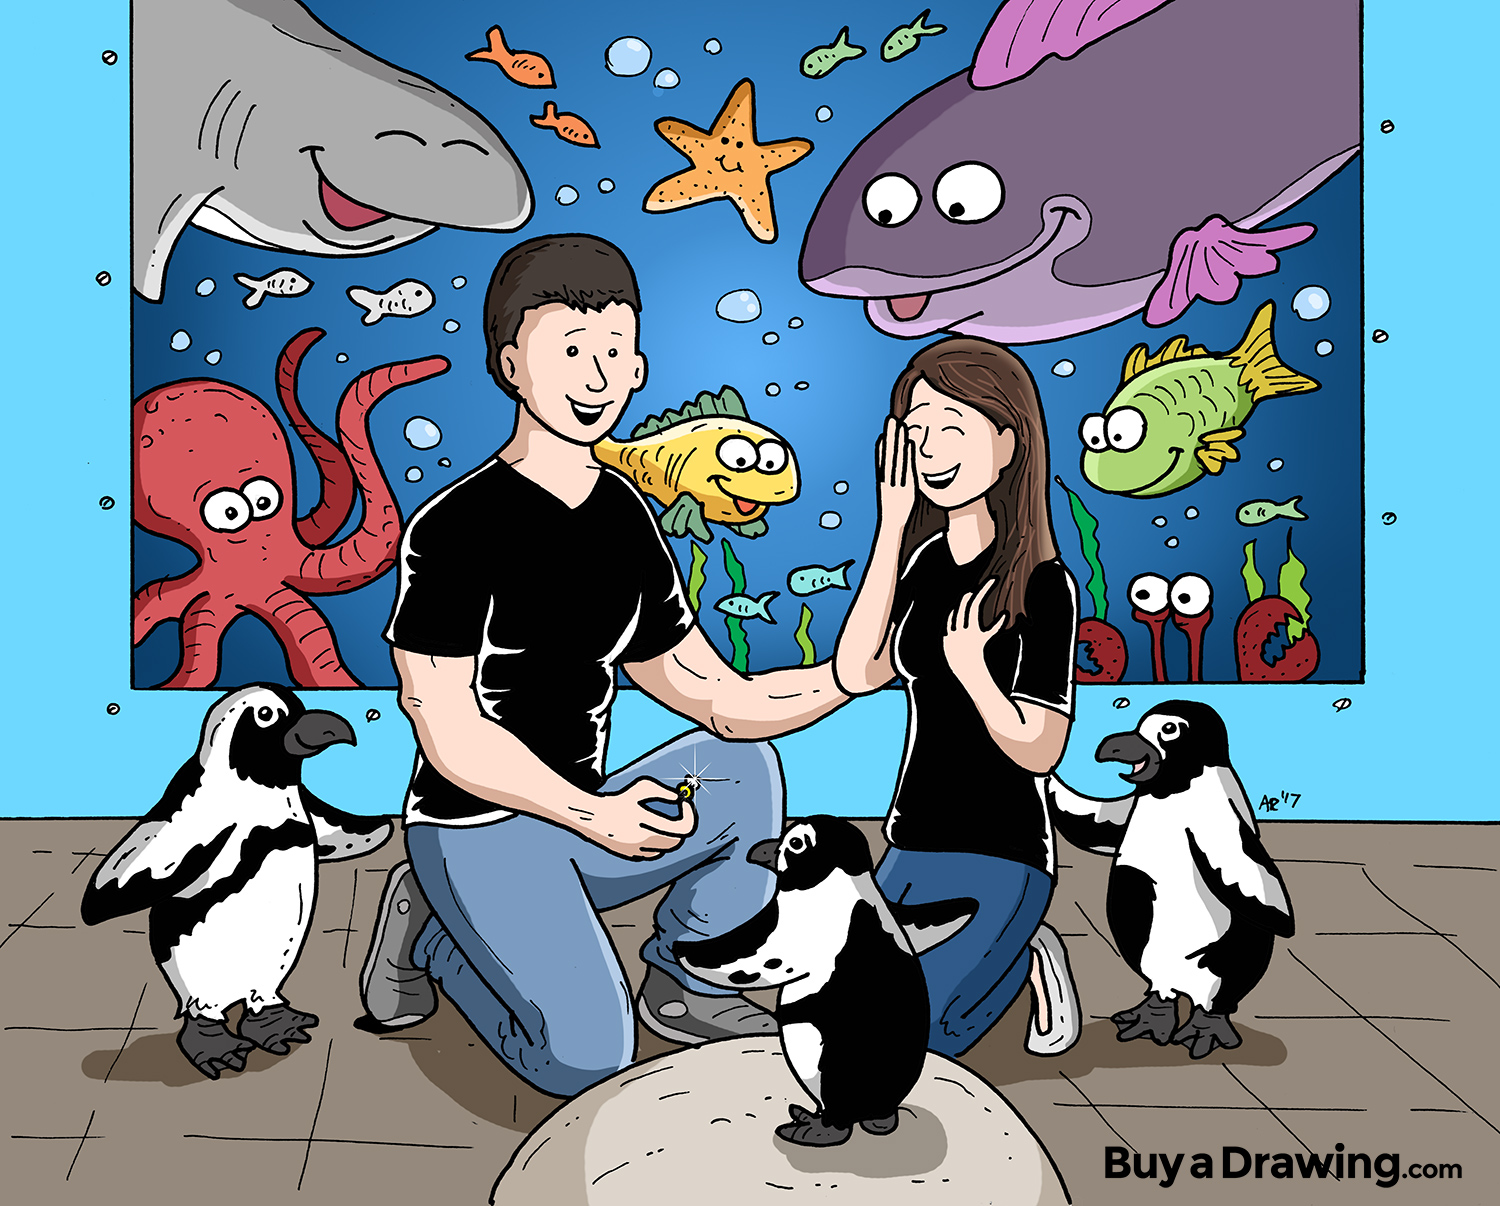 Cartoon Engagement Proposal Drawing at an Aquarium